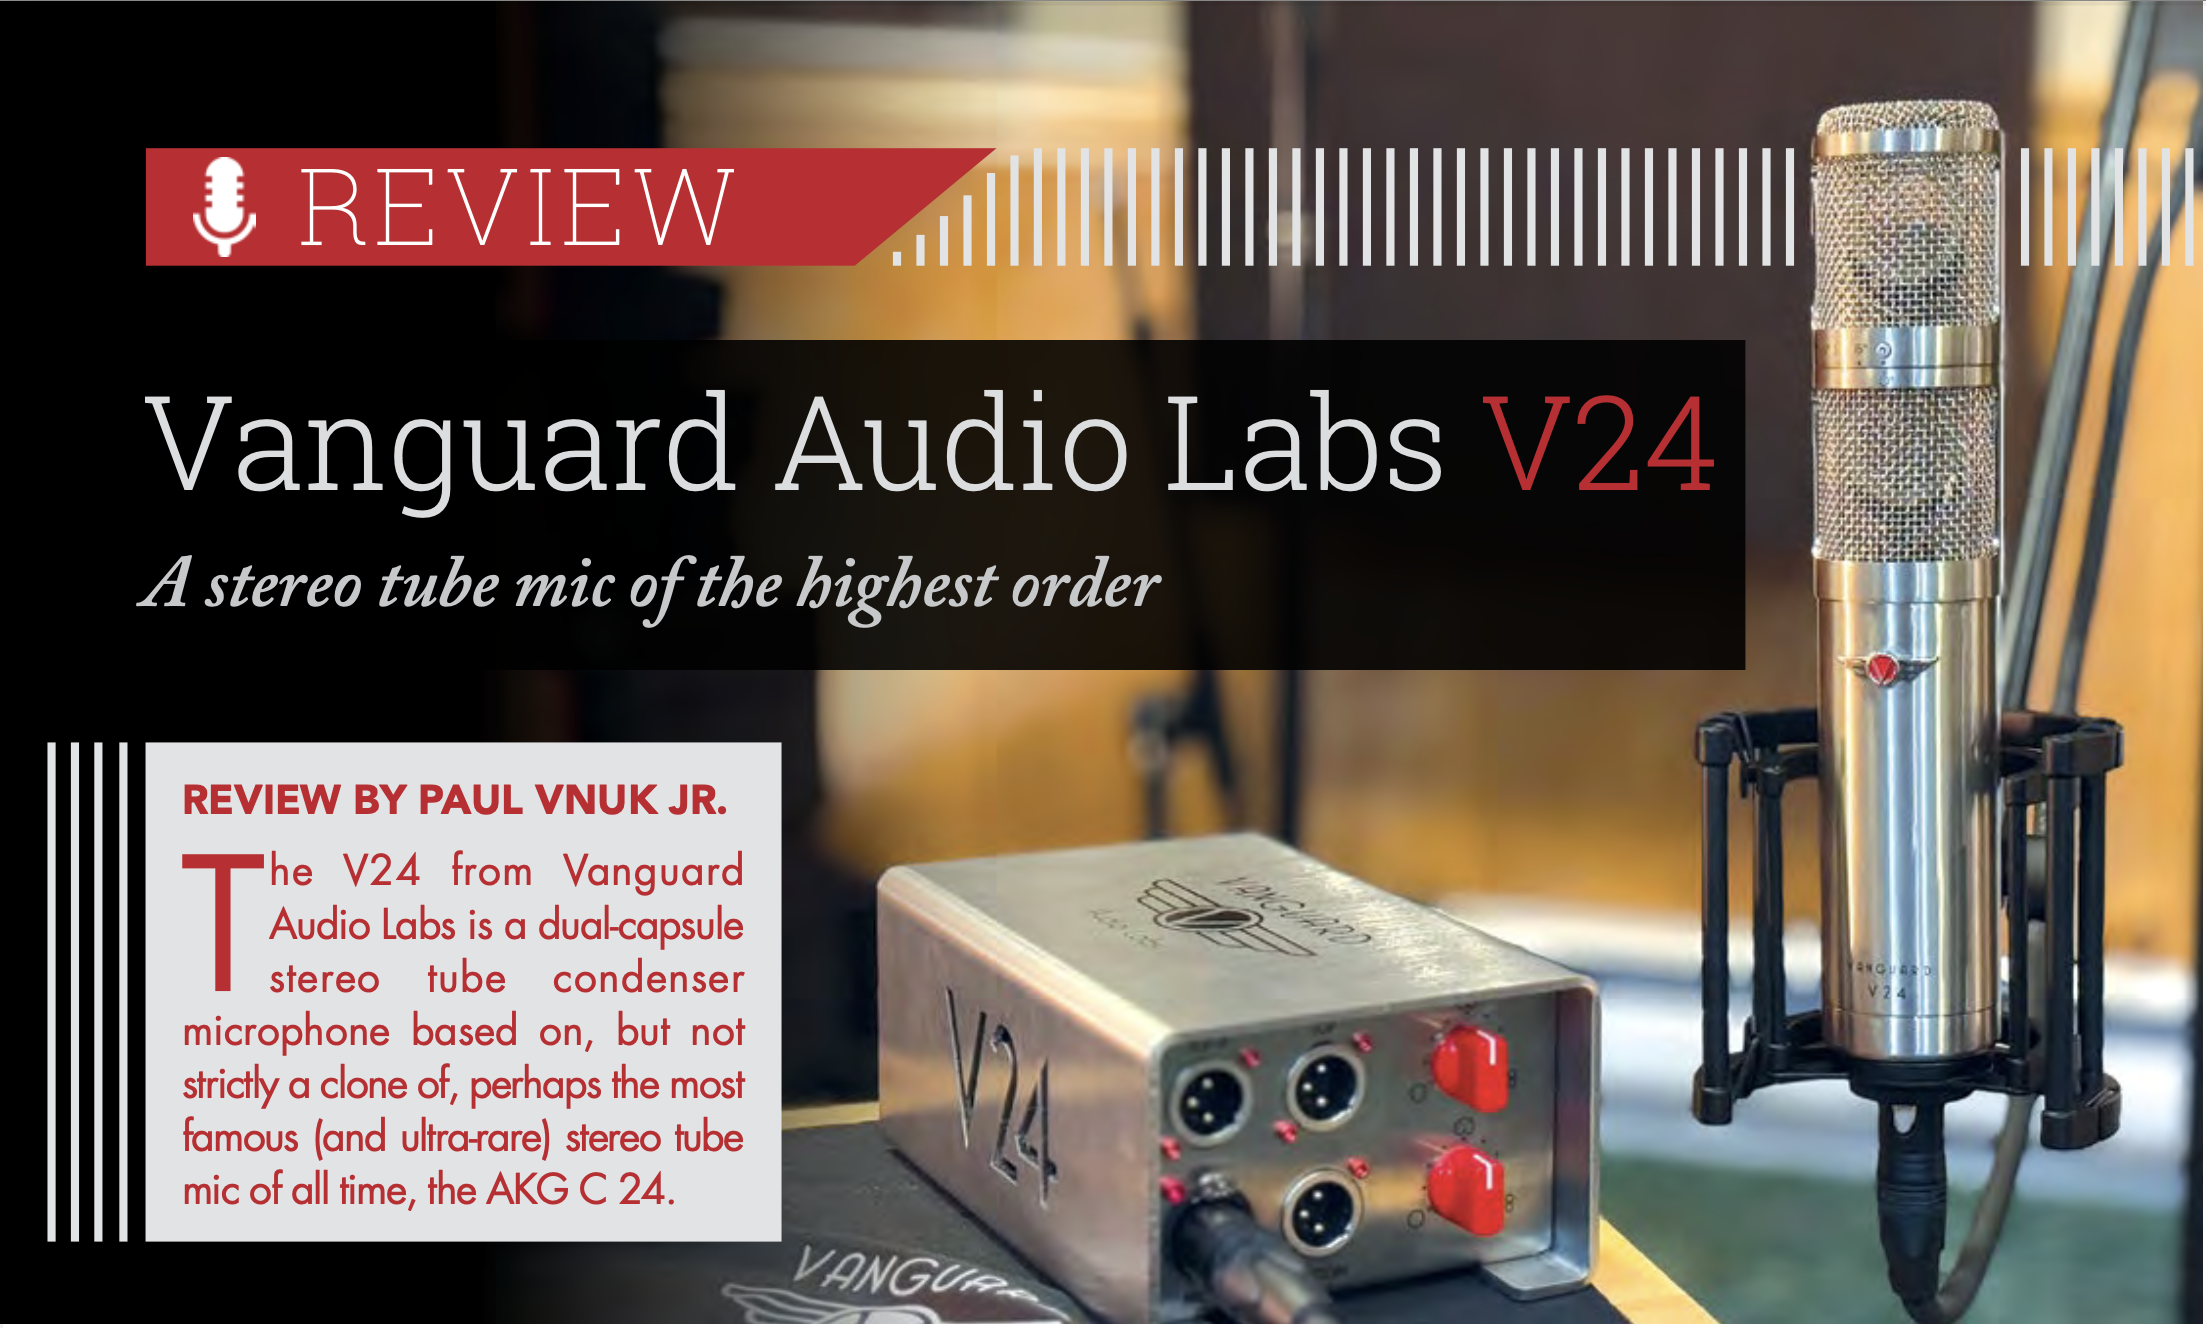 vanguard v24 stereo tube condenser review in recording magazine